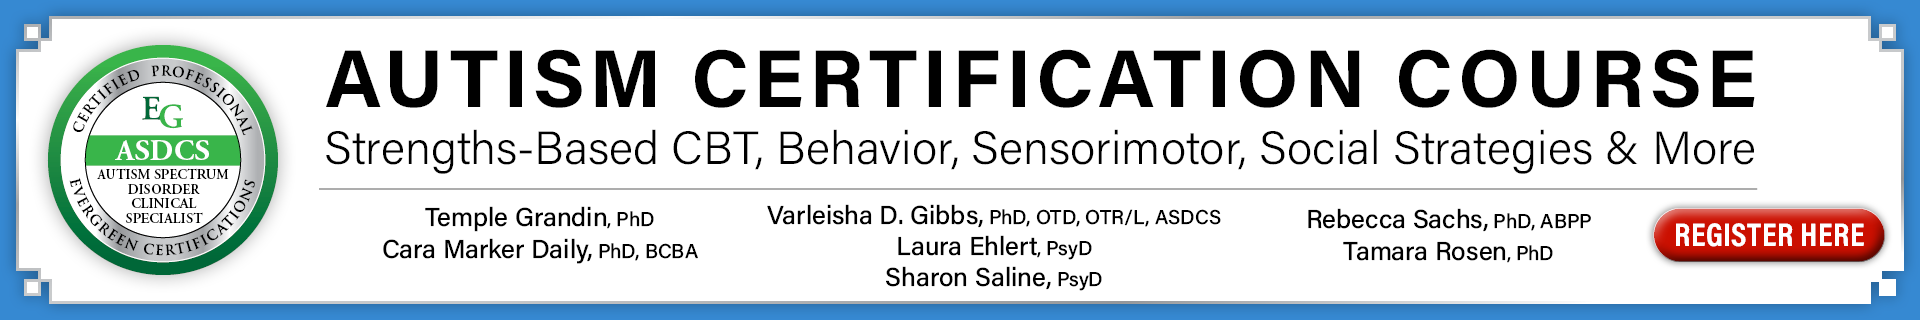 Autism Certification Course: Strengths-Based CBT, Behavior, Sensorimotor, Social Strategies & More